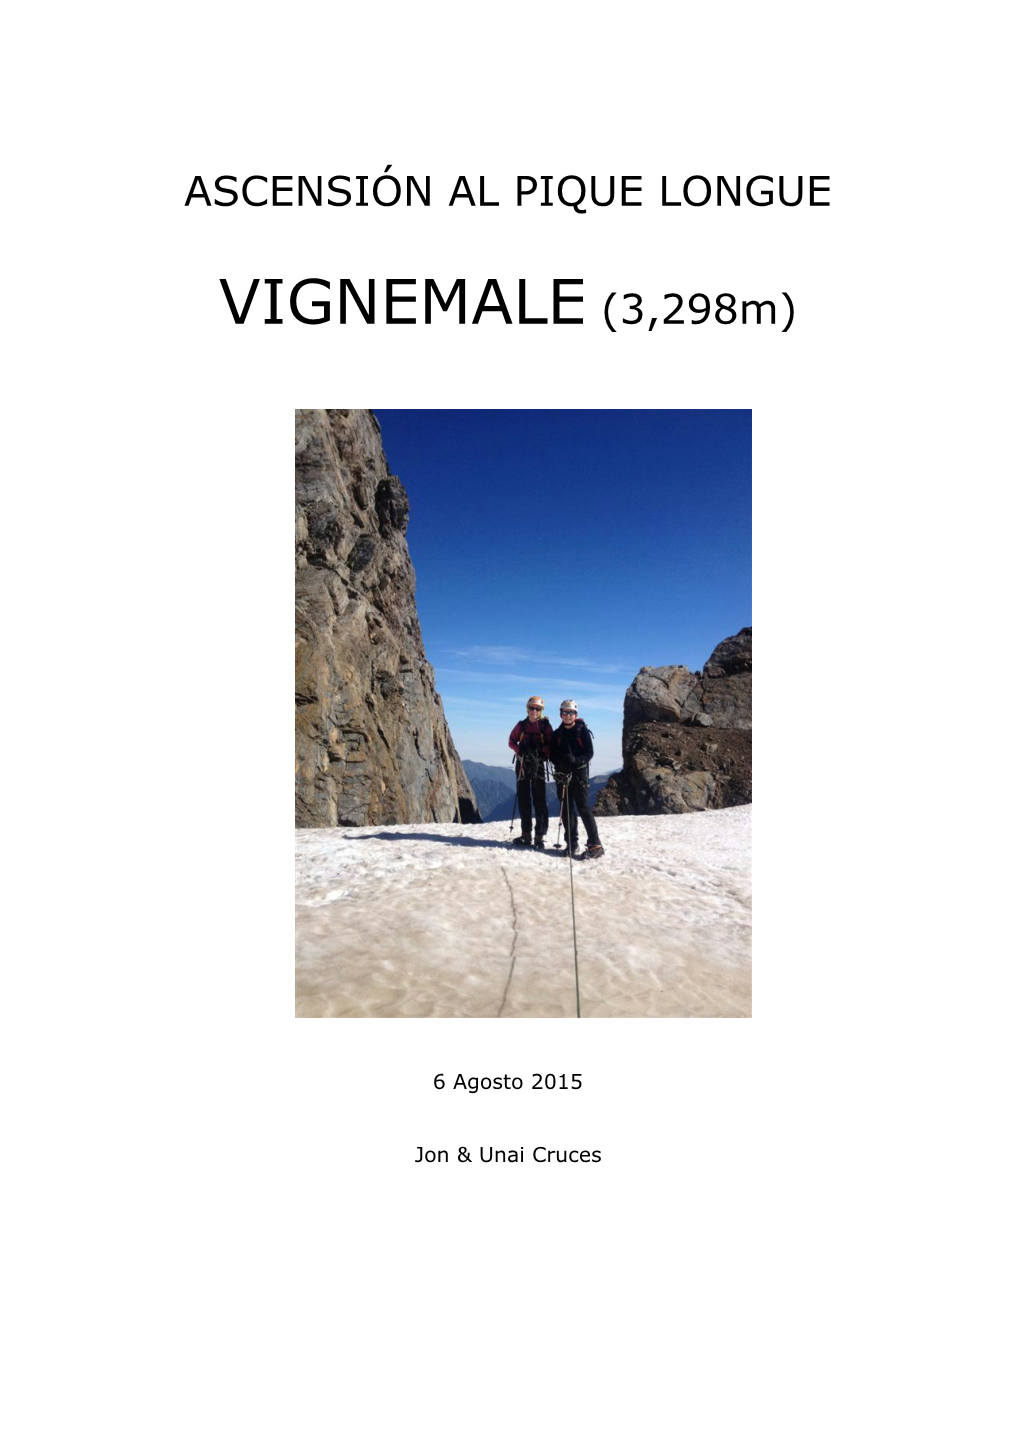 VIGNEMALE (3,298M) ​